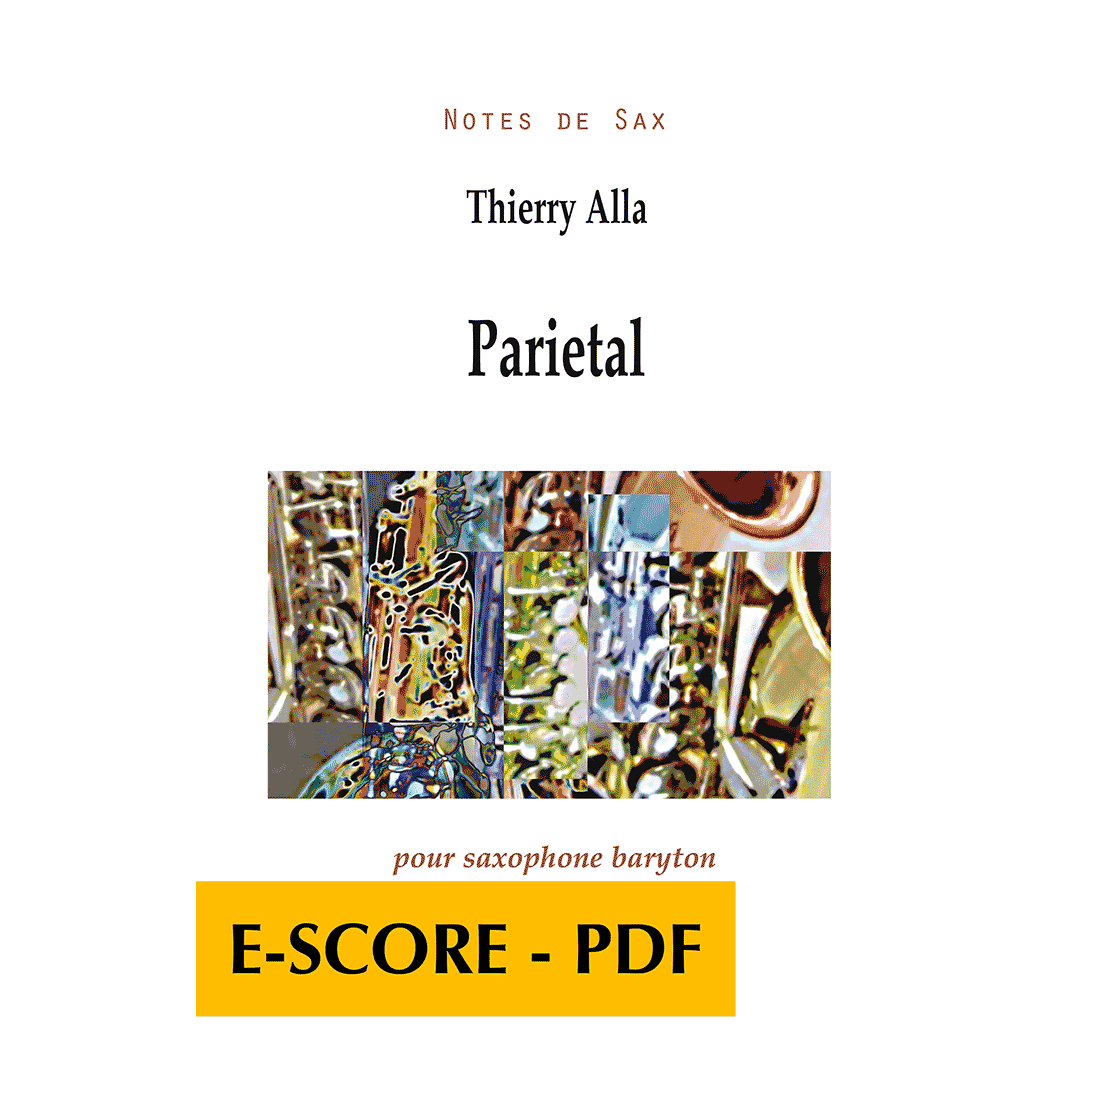 Parietal for baritone saxophone - E-score PDF